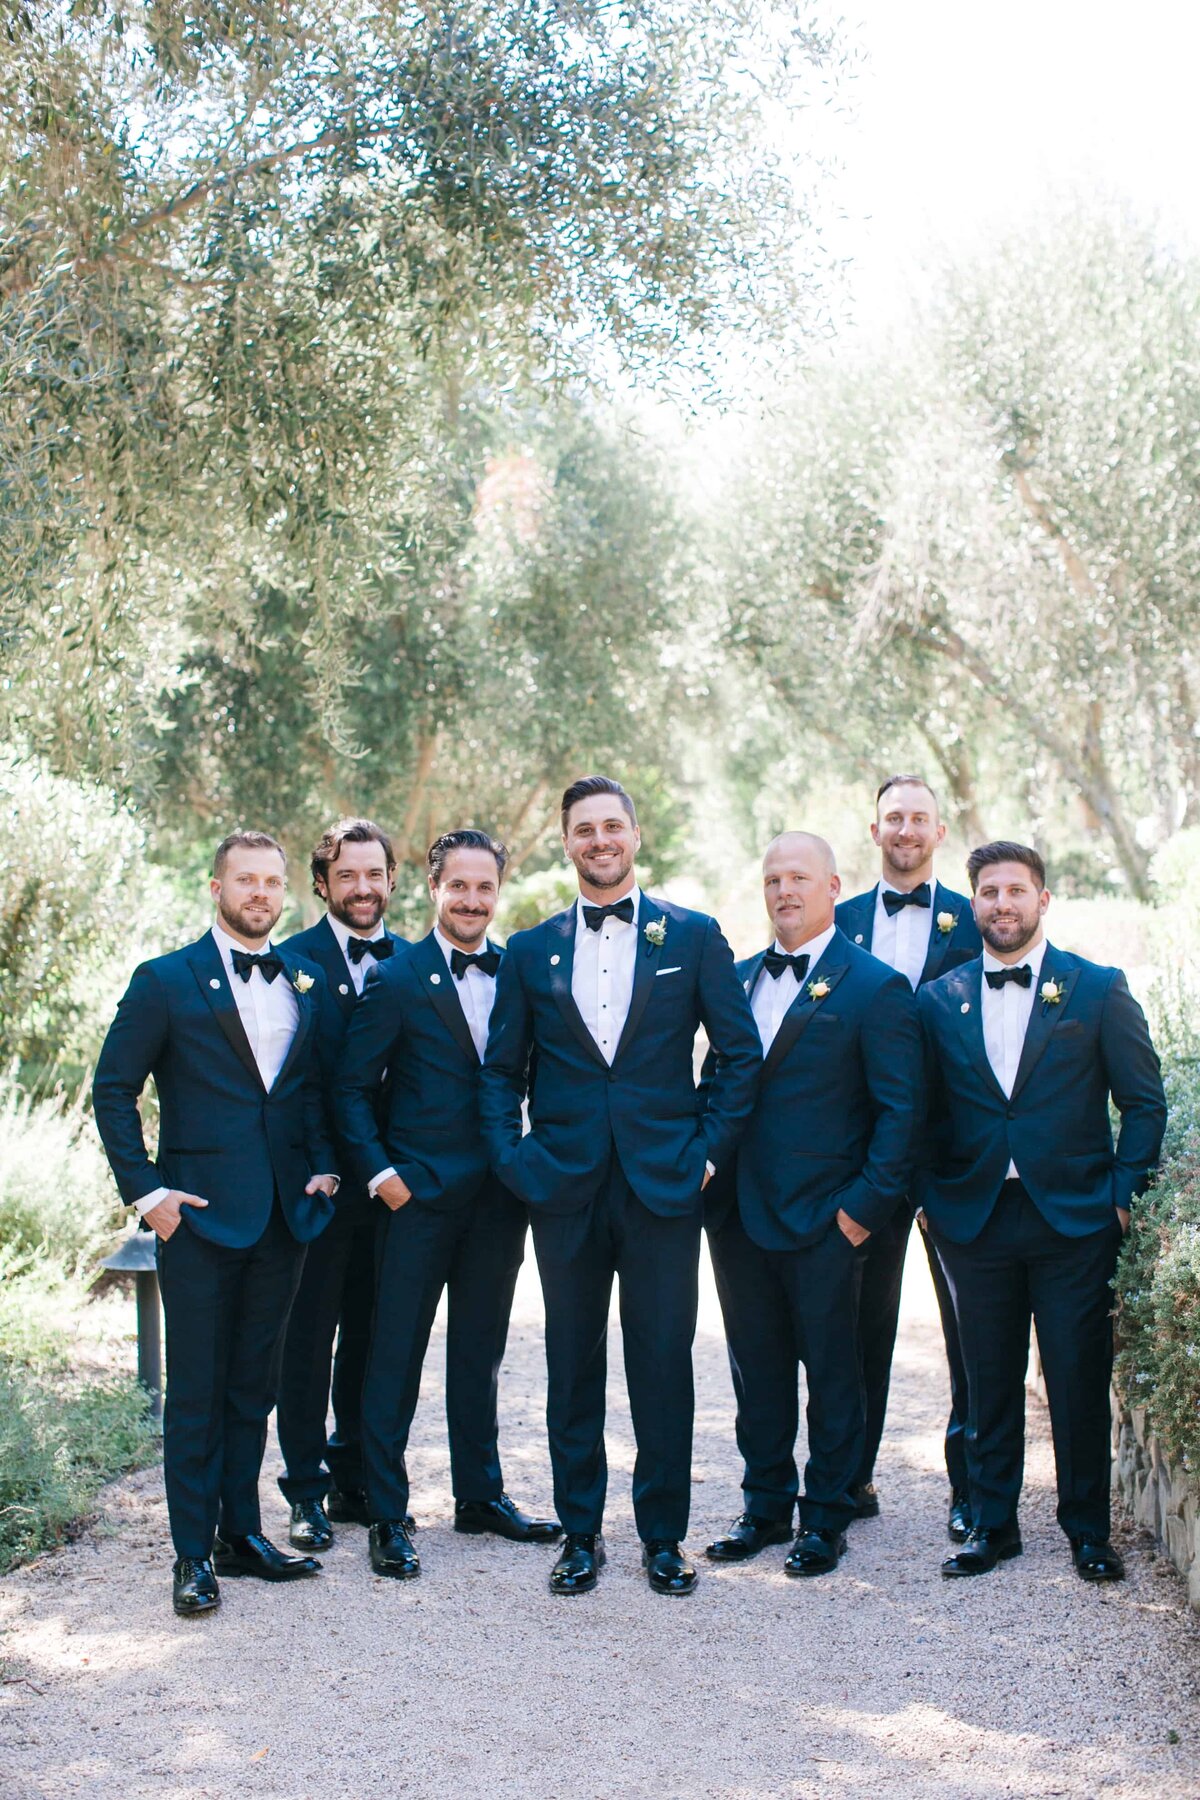 Groom and groomsmen at an outdoor wedding venue